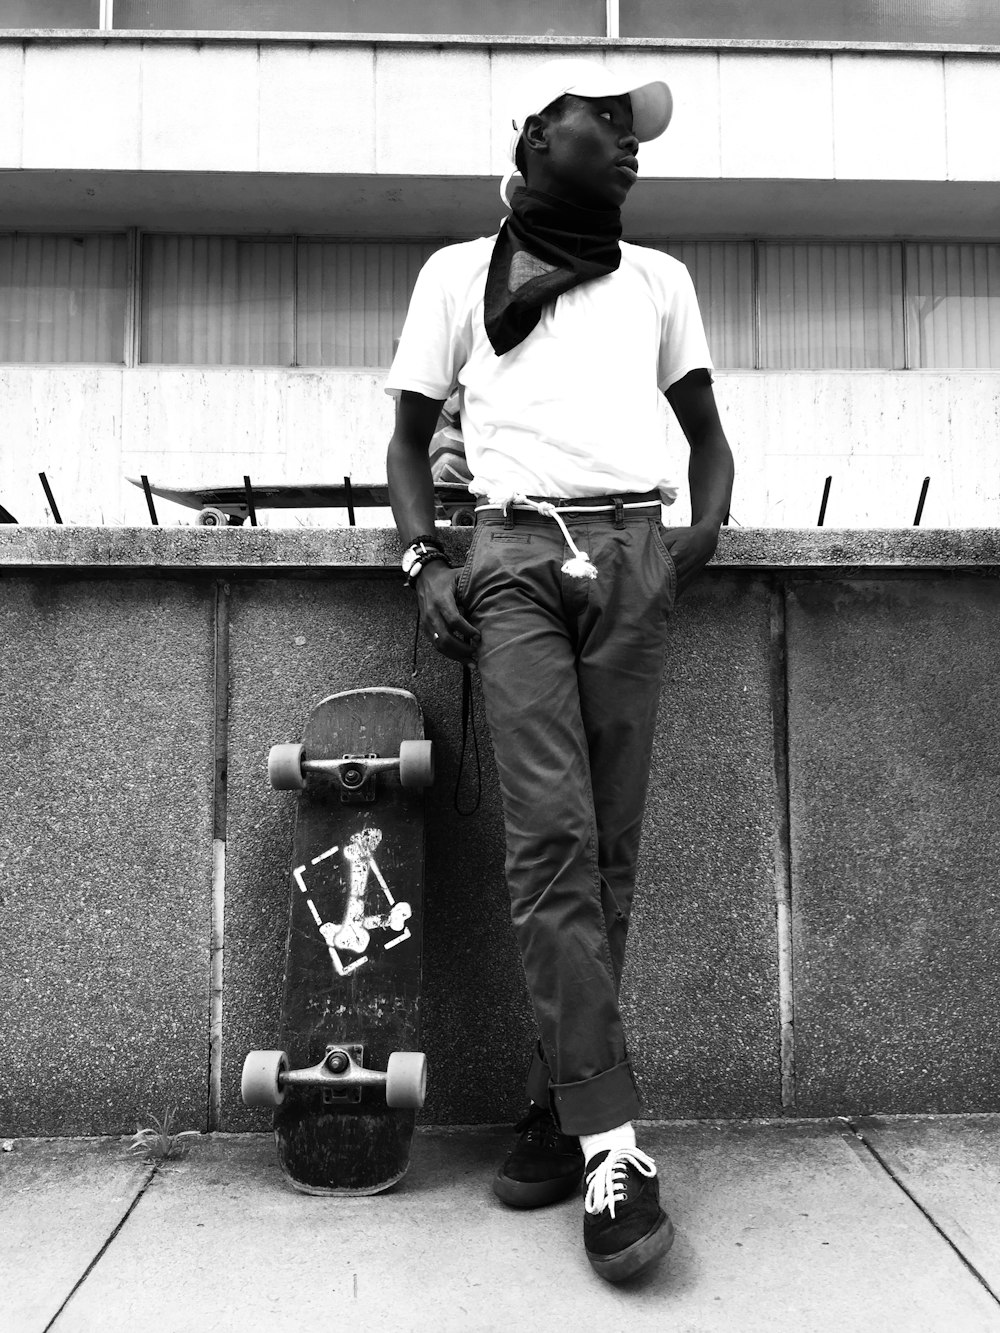 man in white dress shirt and black pants standing on black skateboard